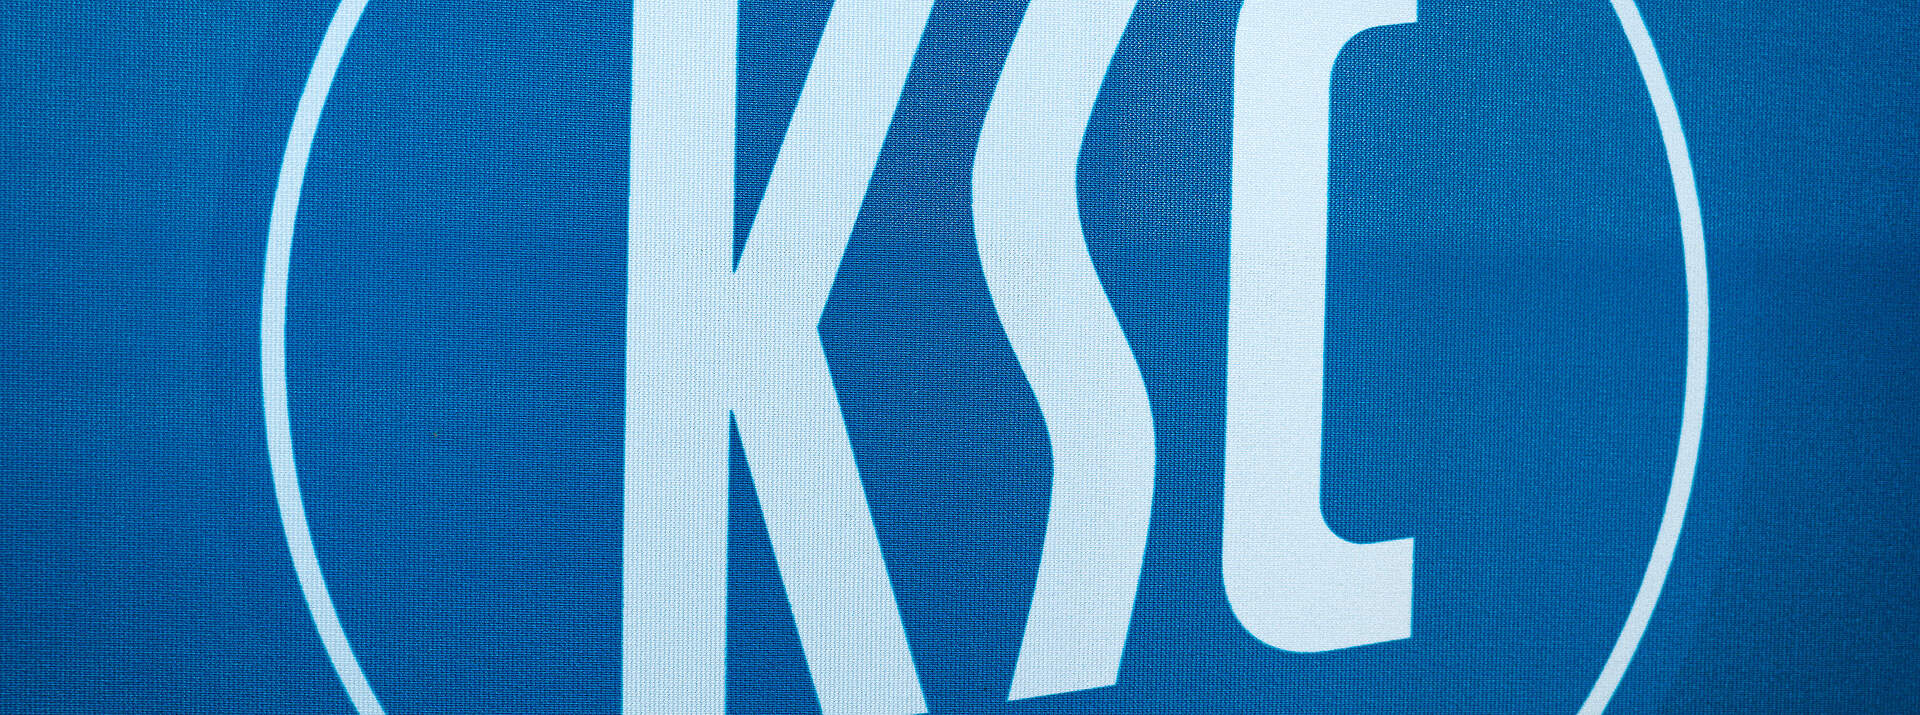 KSC-Logo